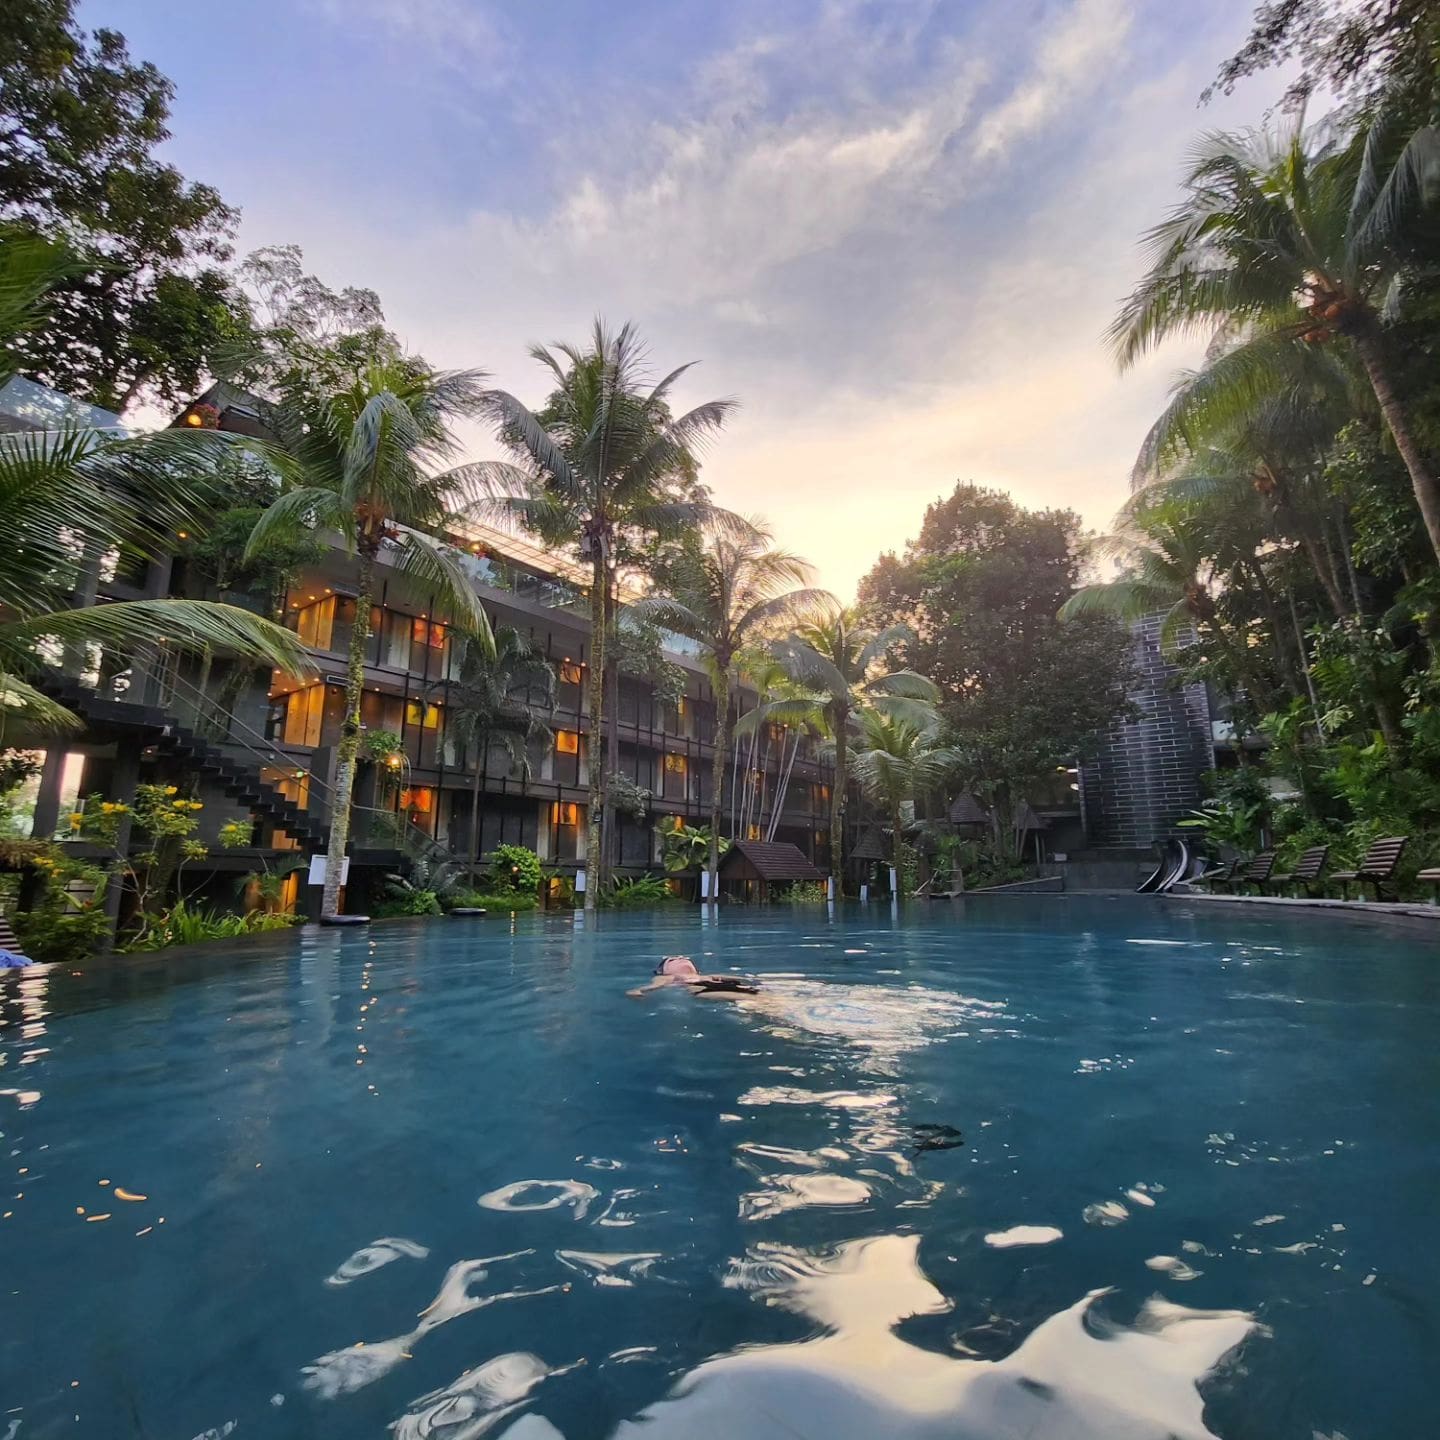 Hotel suites in Singapore - Siloso Beach Resort view